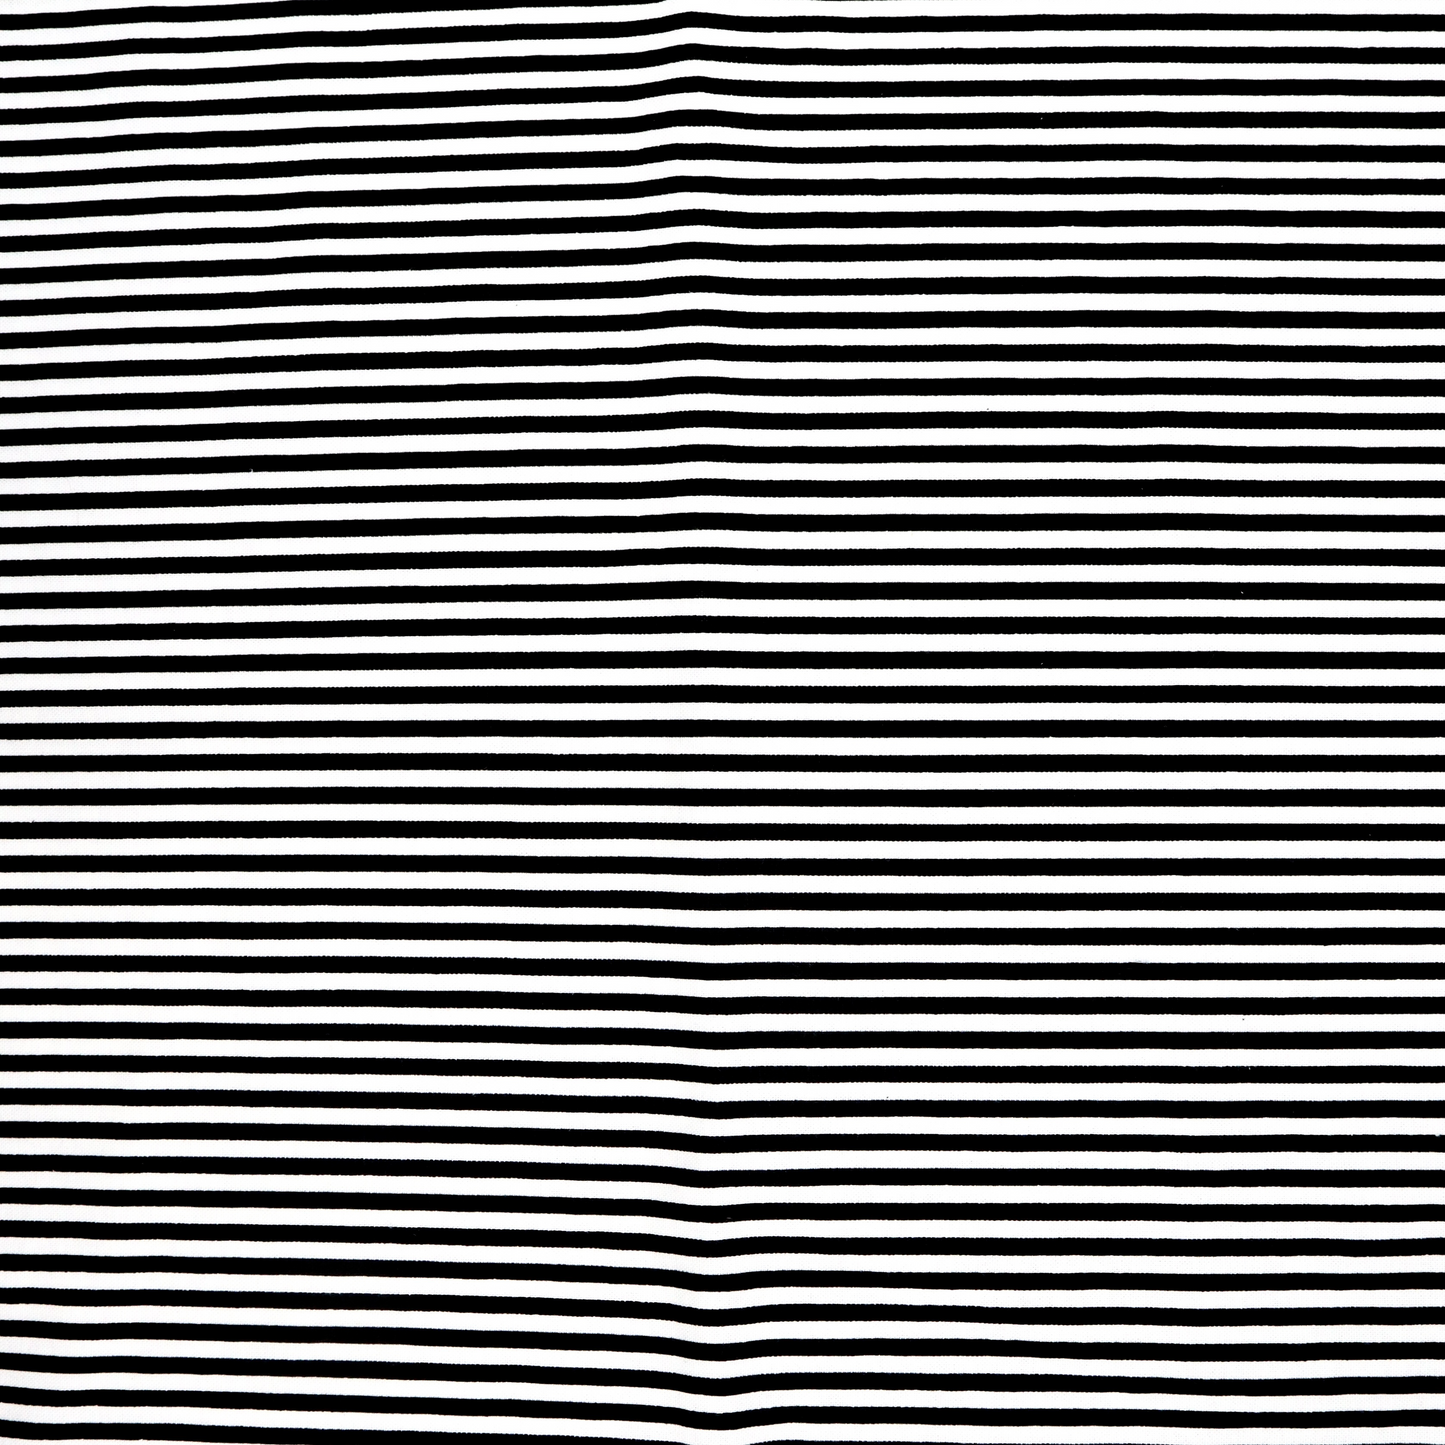 Hypnotic B&W Stripes - Quilting Cotton